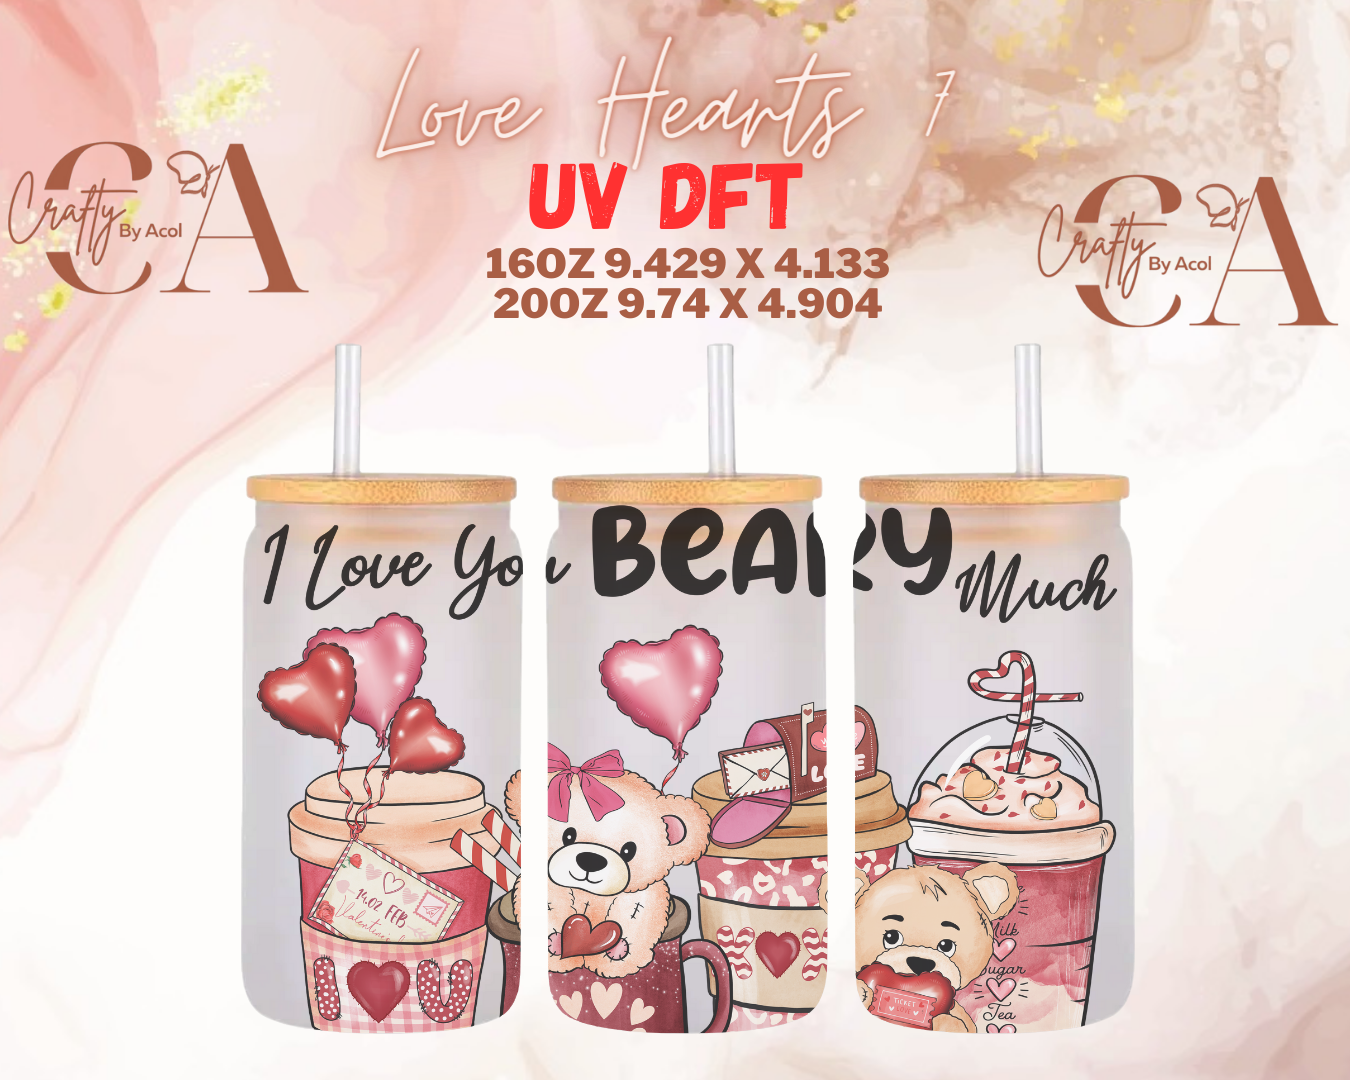 Love Heart UV DFT Cup Wrap